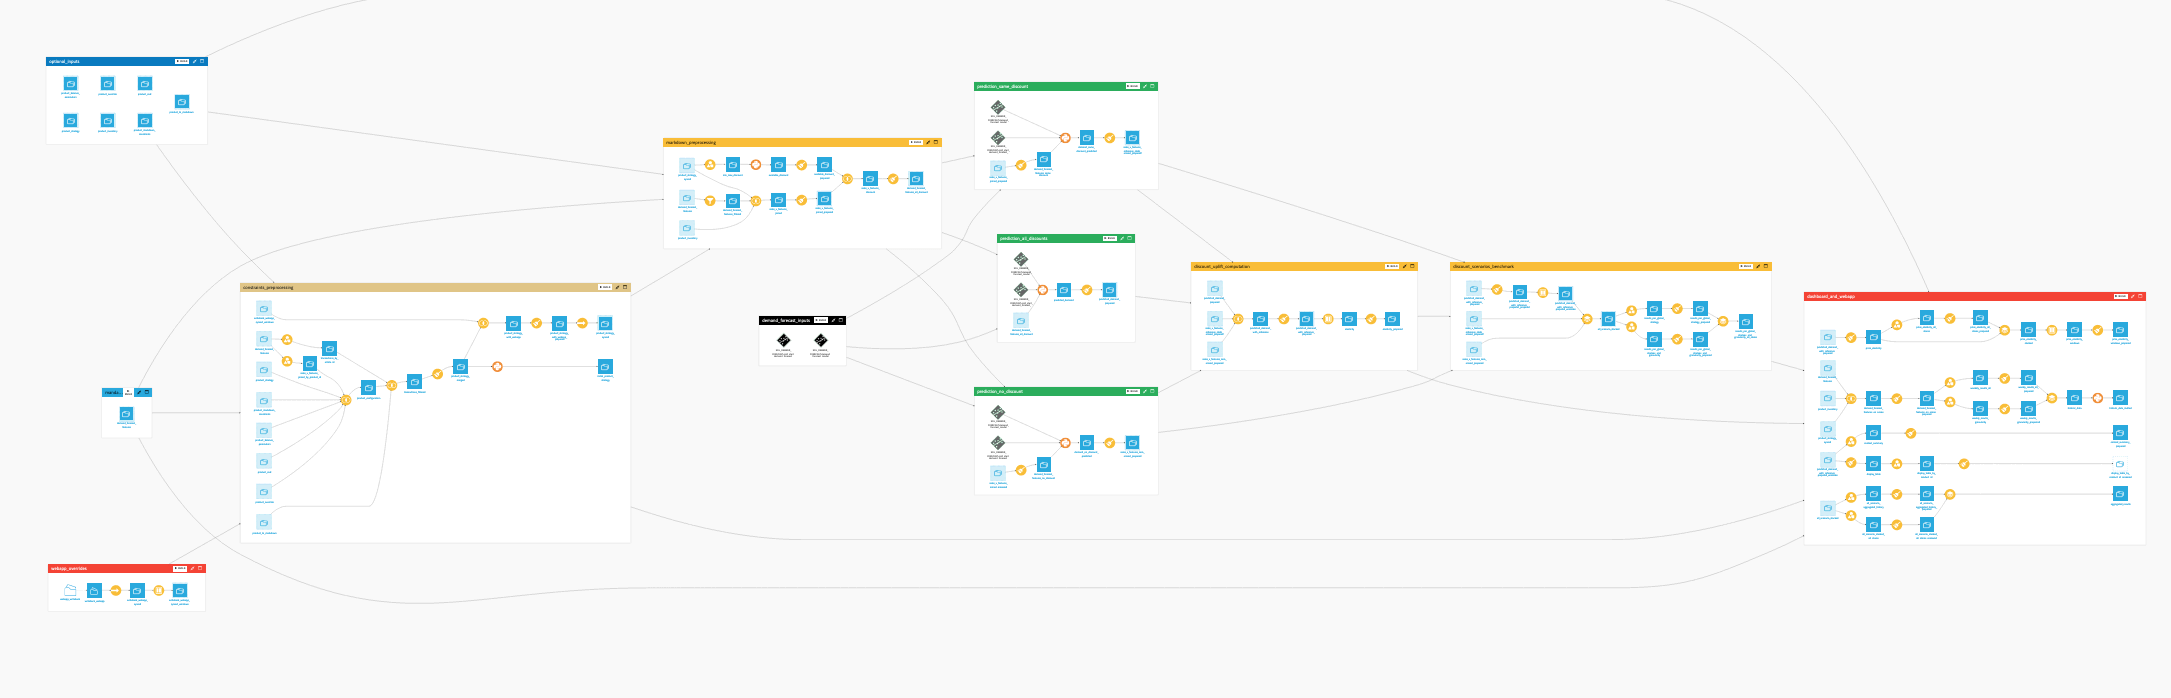 Dataiku screenshot of the final project Flow showing all Flow zones.